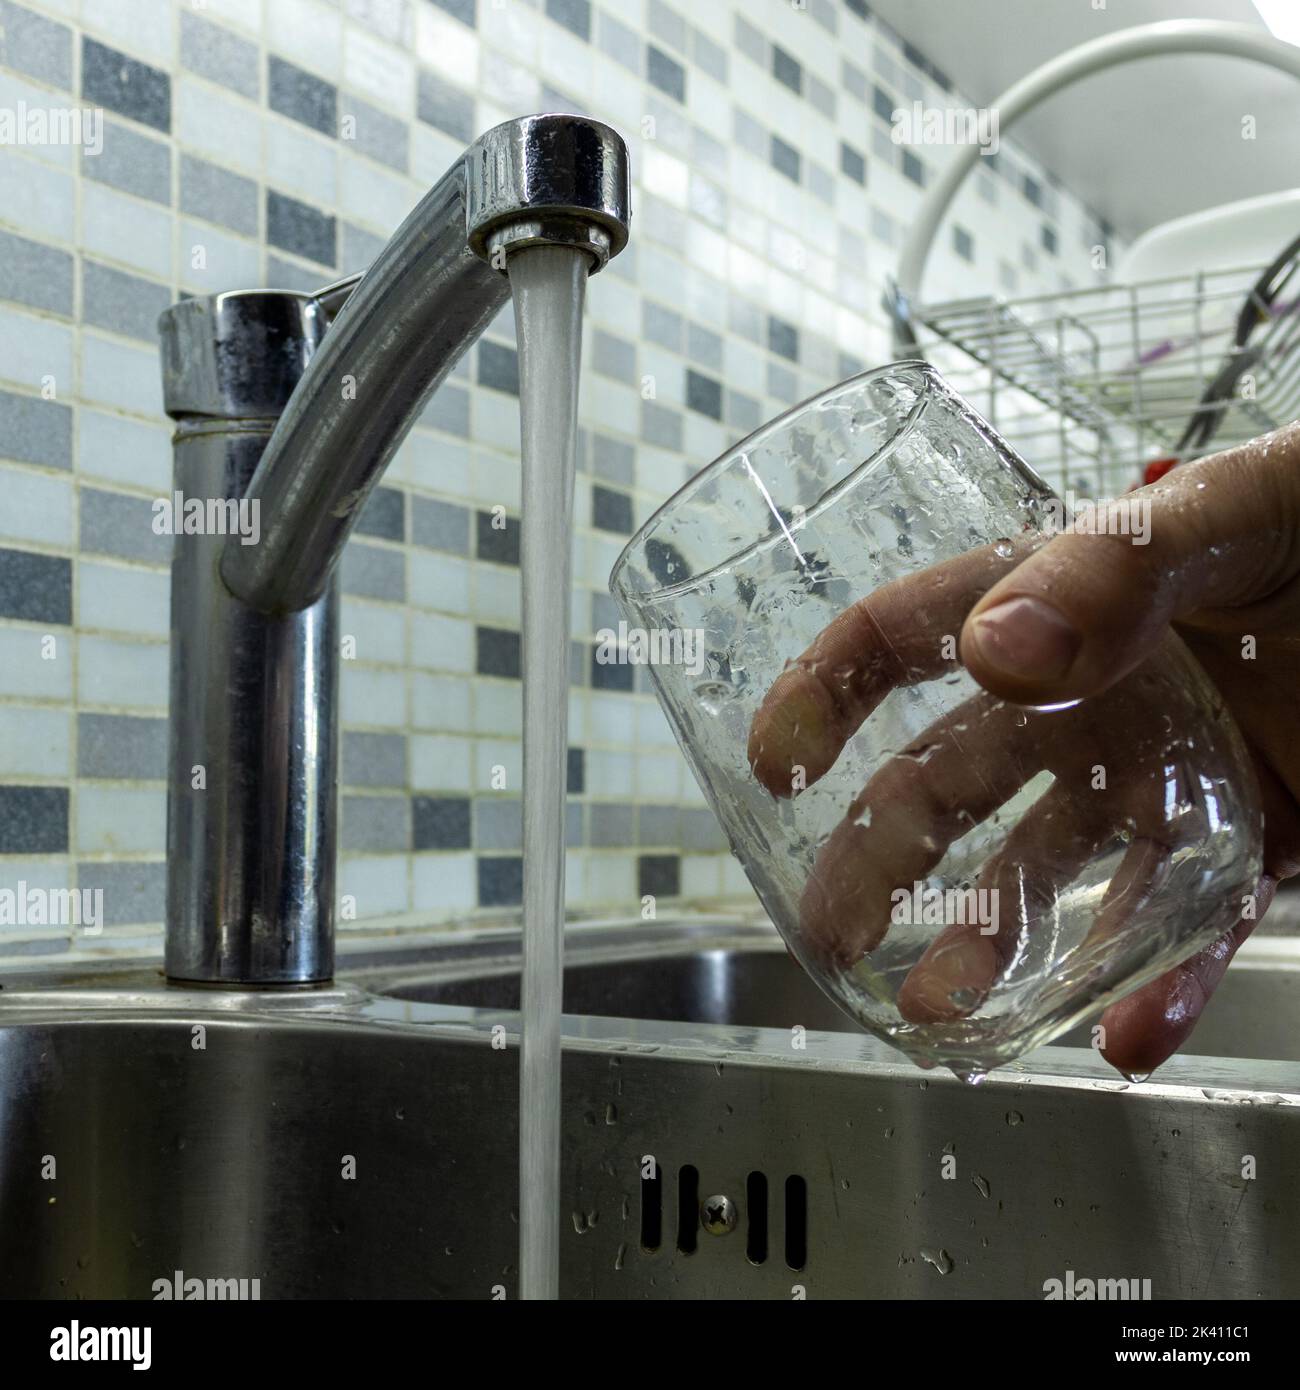 Caucasian man washing glasses in the kitchen. Hygiene Stock Photo